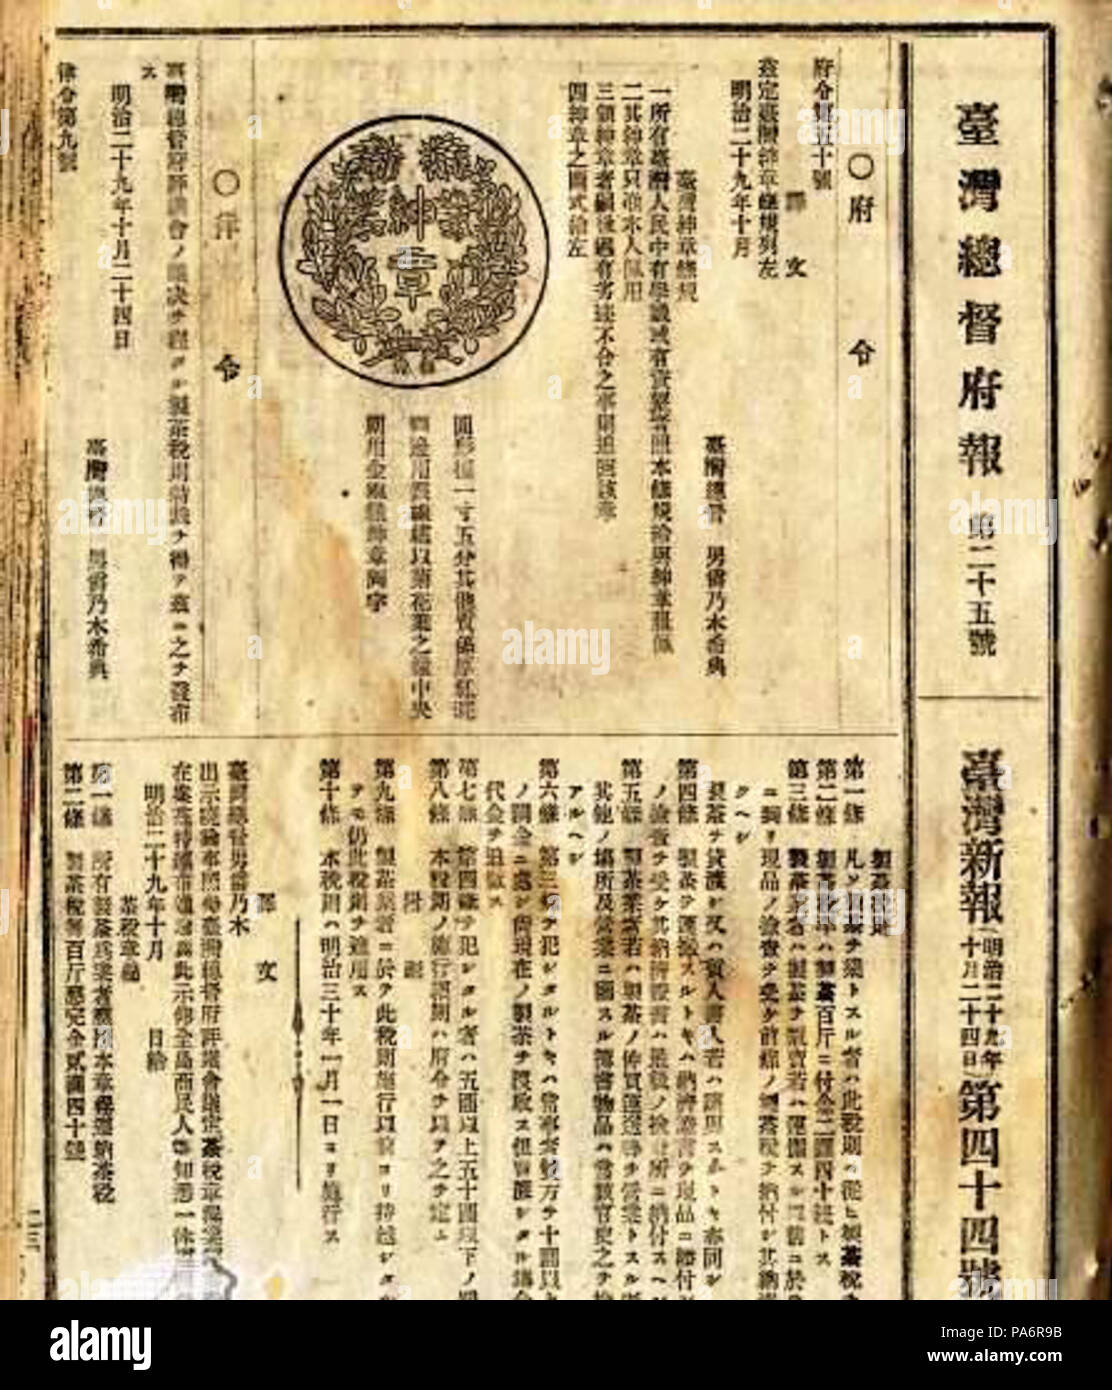 3 16 October Gazette Of The Governor General Of Taiwan 明治29年10月臺灣總督府報 臺灣紳章條規stock Photo Alamy